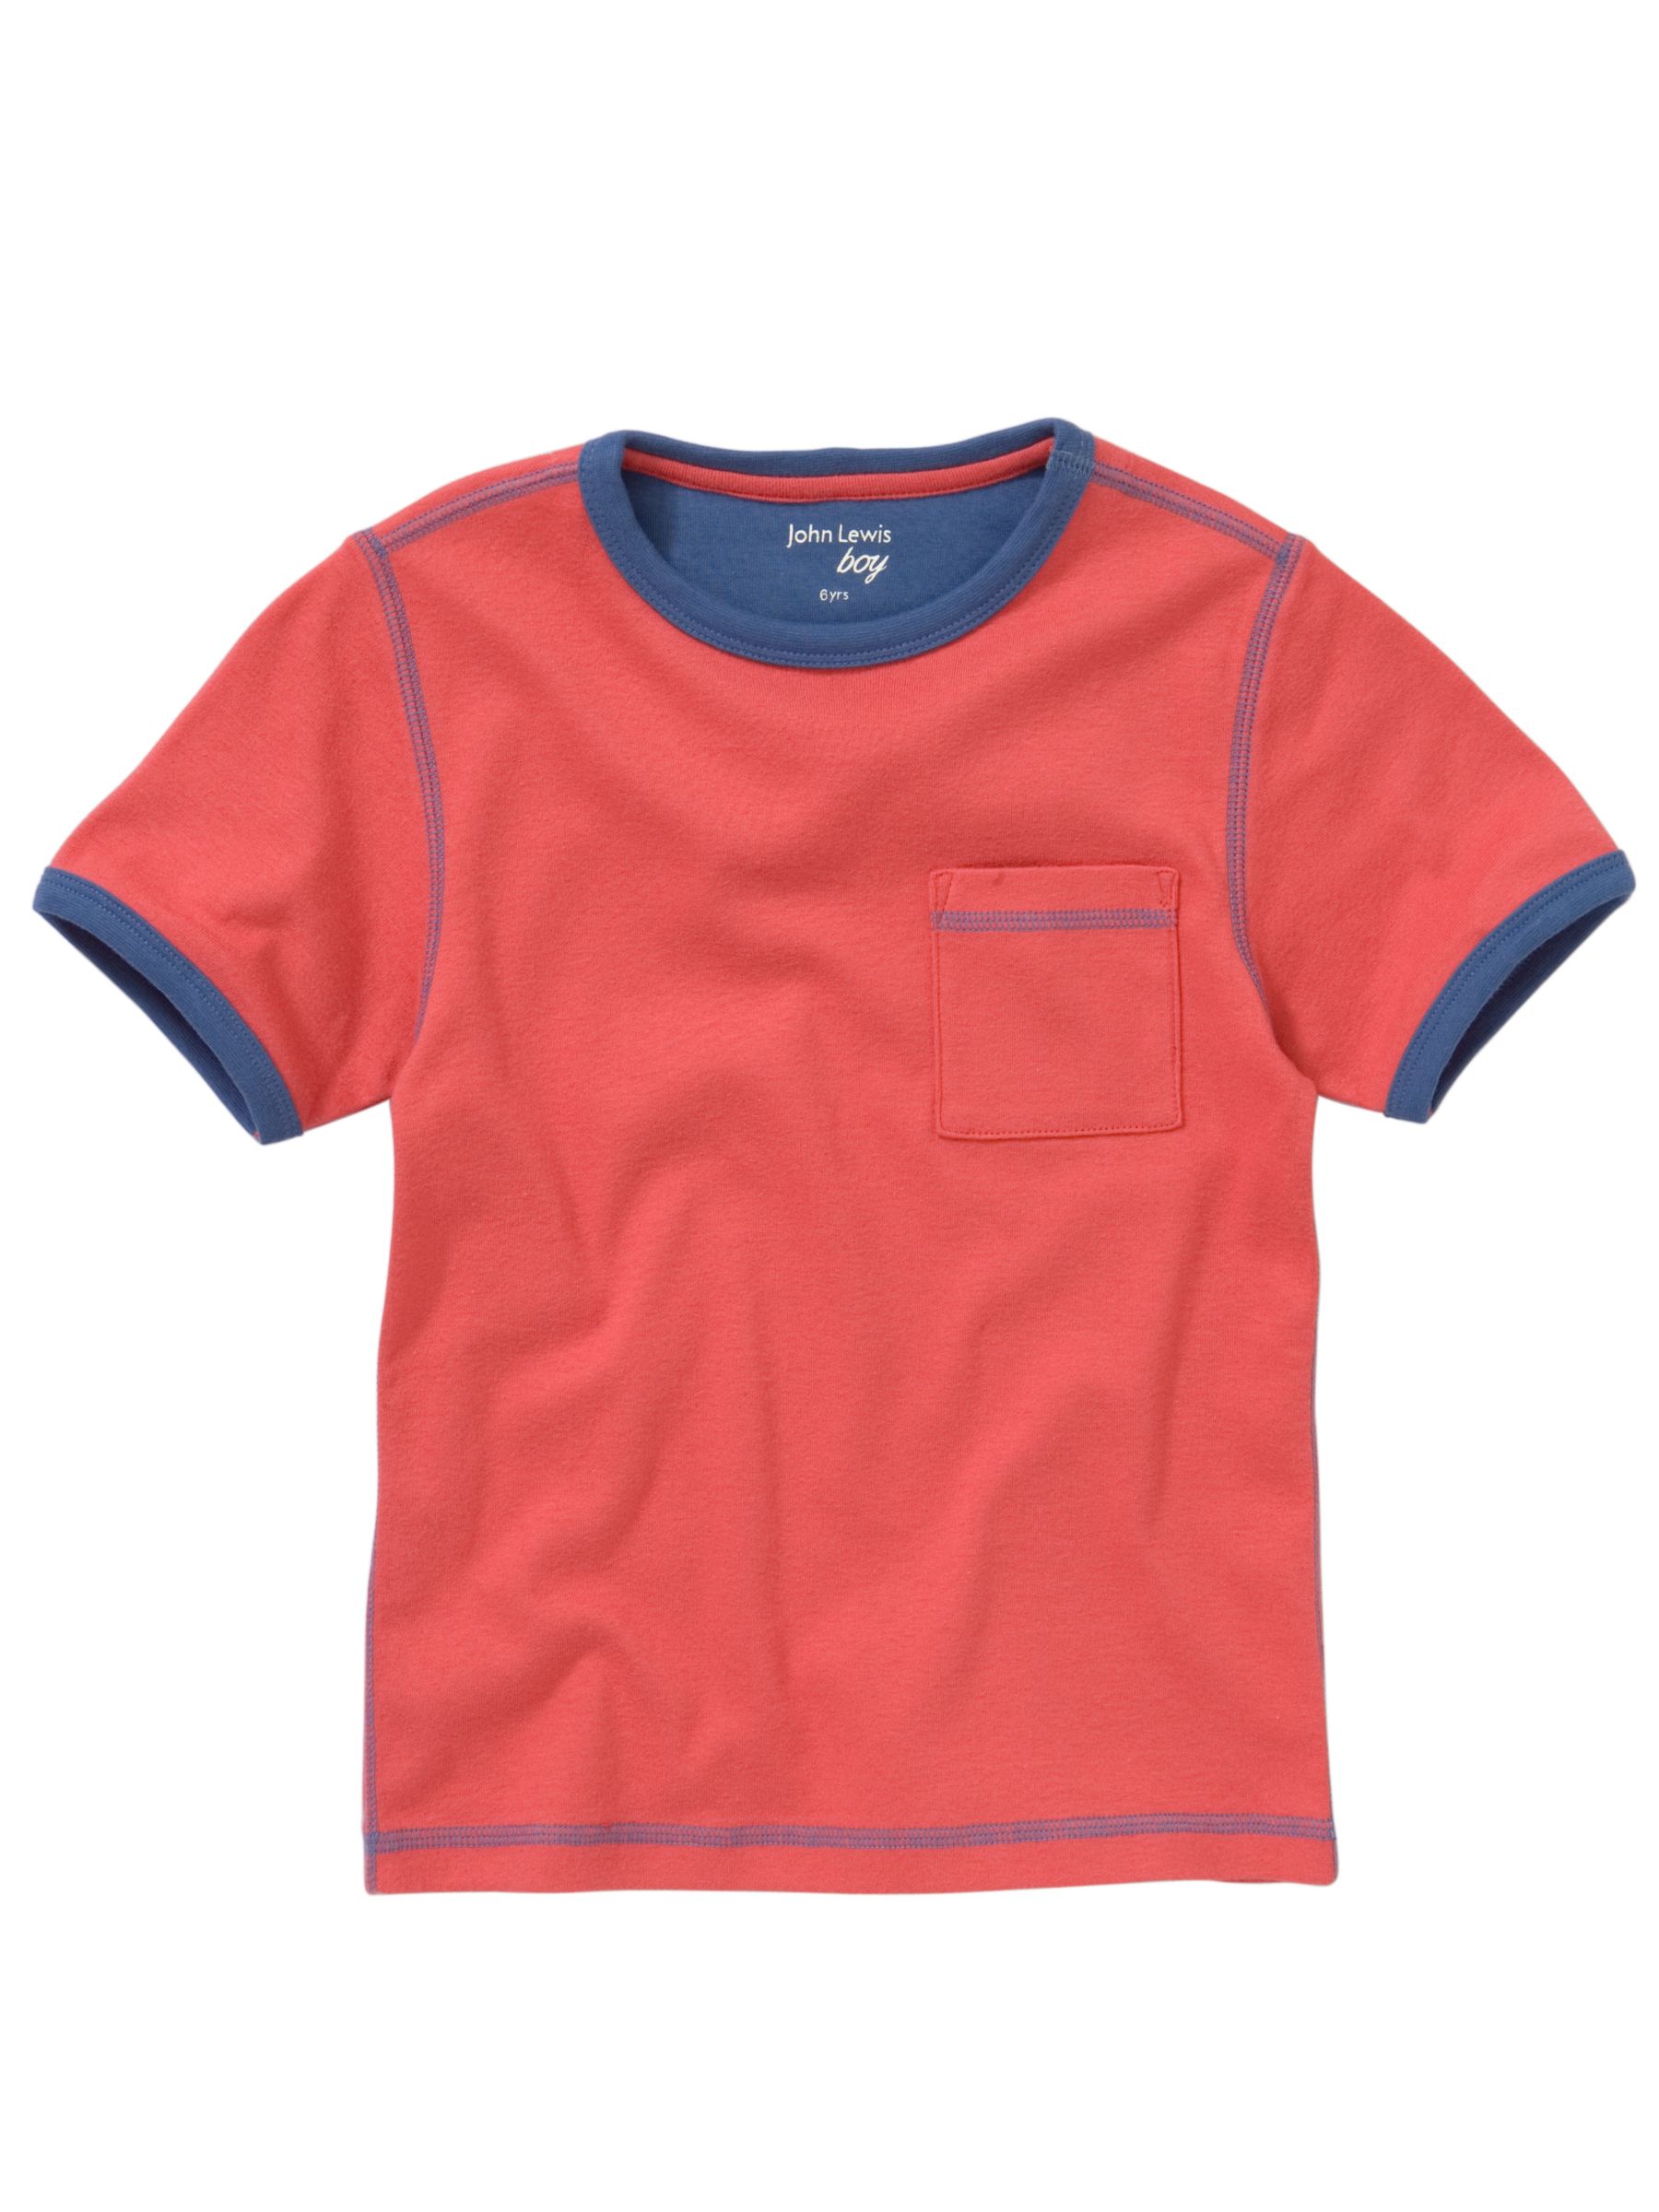 John Lewis Boy Short Sleeve T-Shirt, Red, 8 years